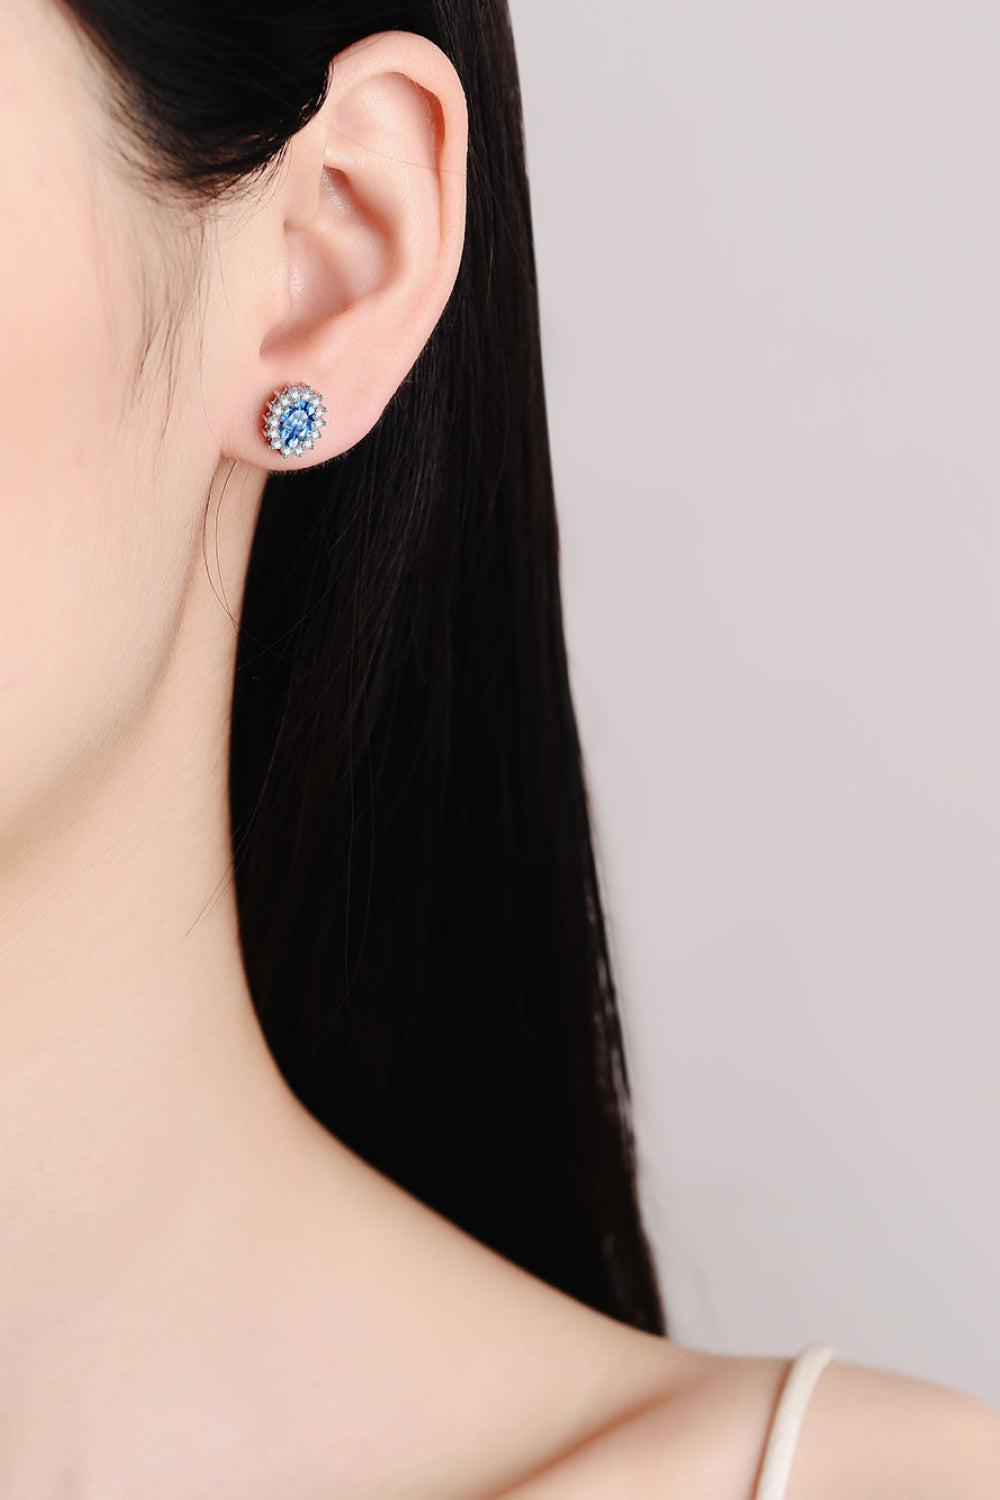 1 Carat Moissanite 925 Sterling Silver Stud Earrings BLUE ZONE PLANET